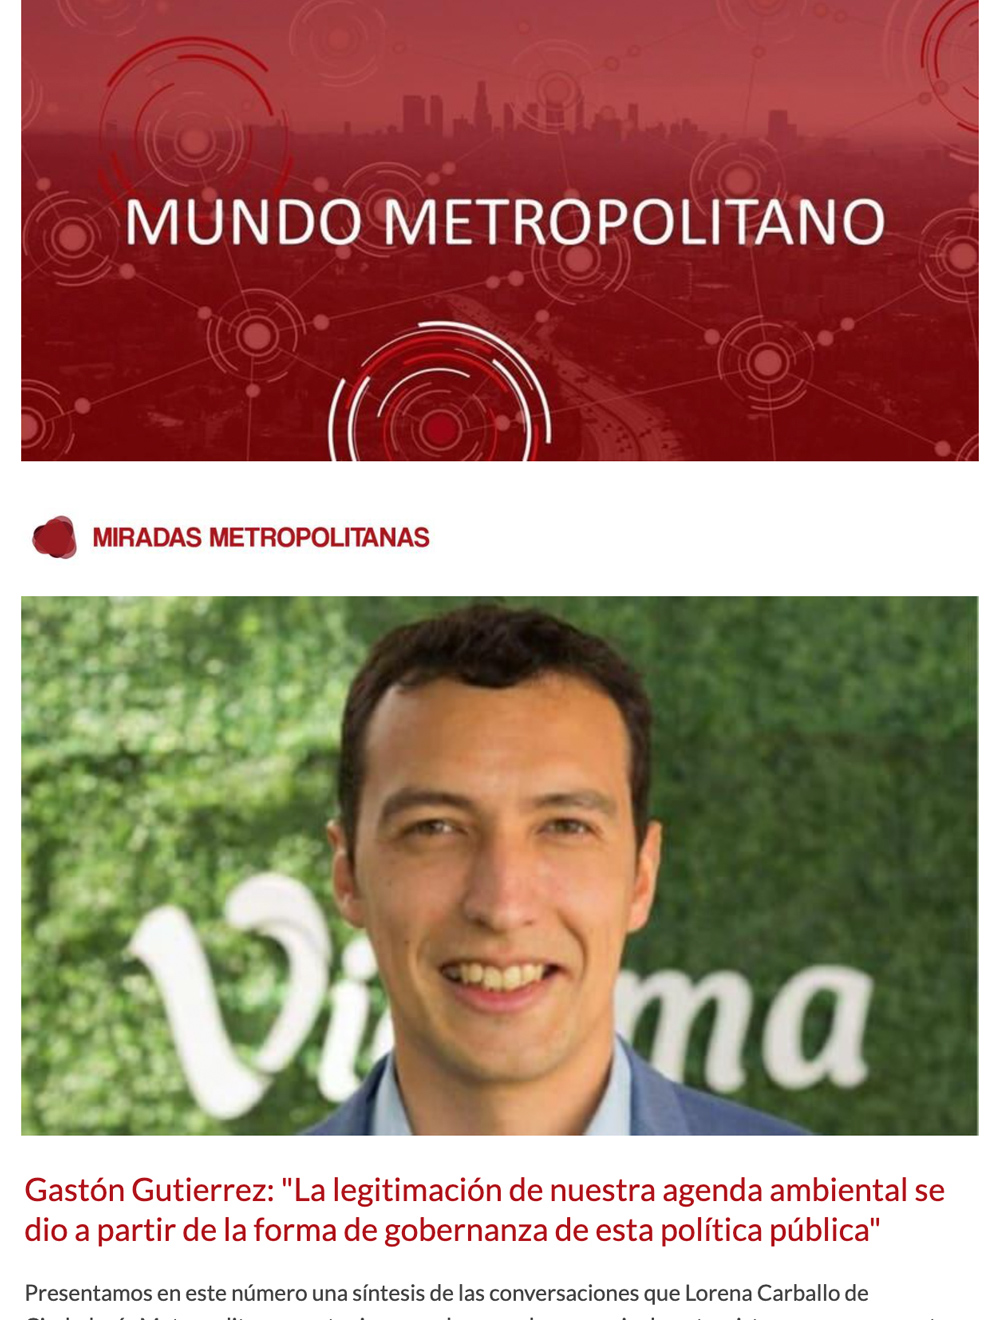 Newsletter Mundo Metropolitano 17